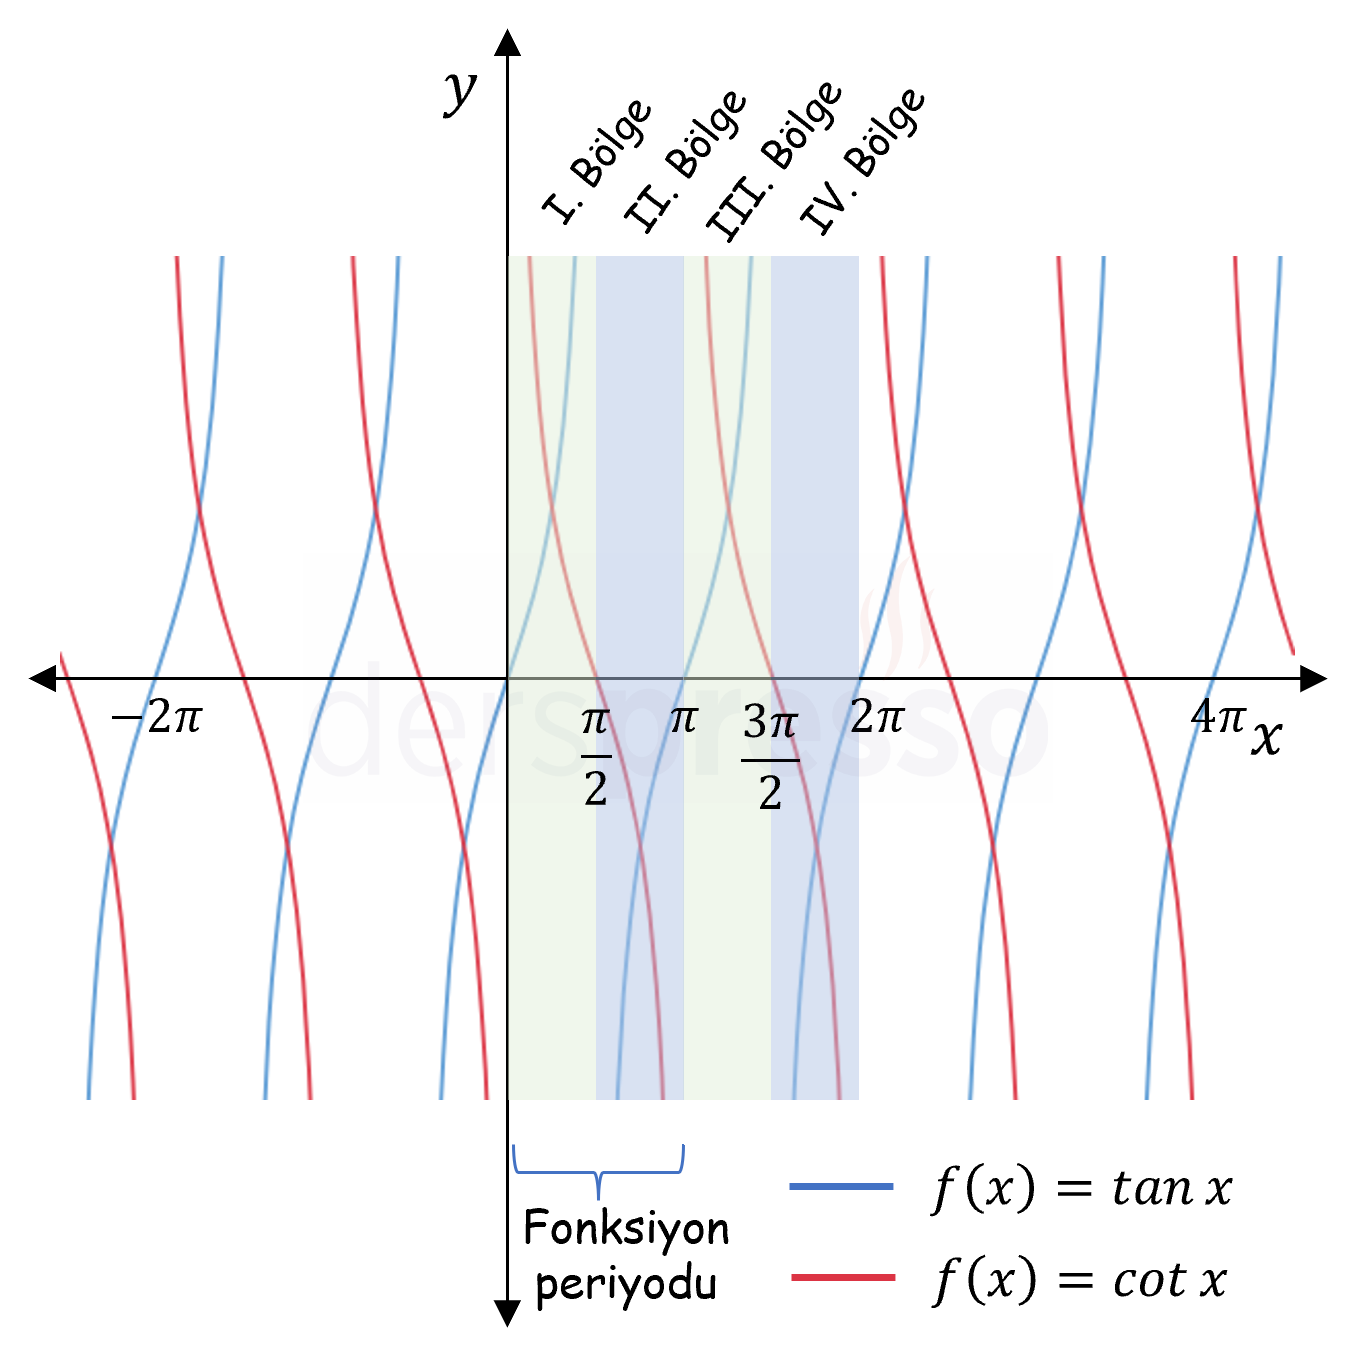 Tanjant-kotanjant fonksiyon grafikleri